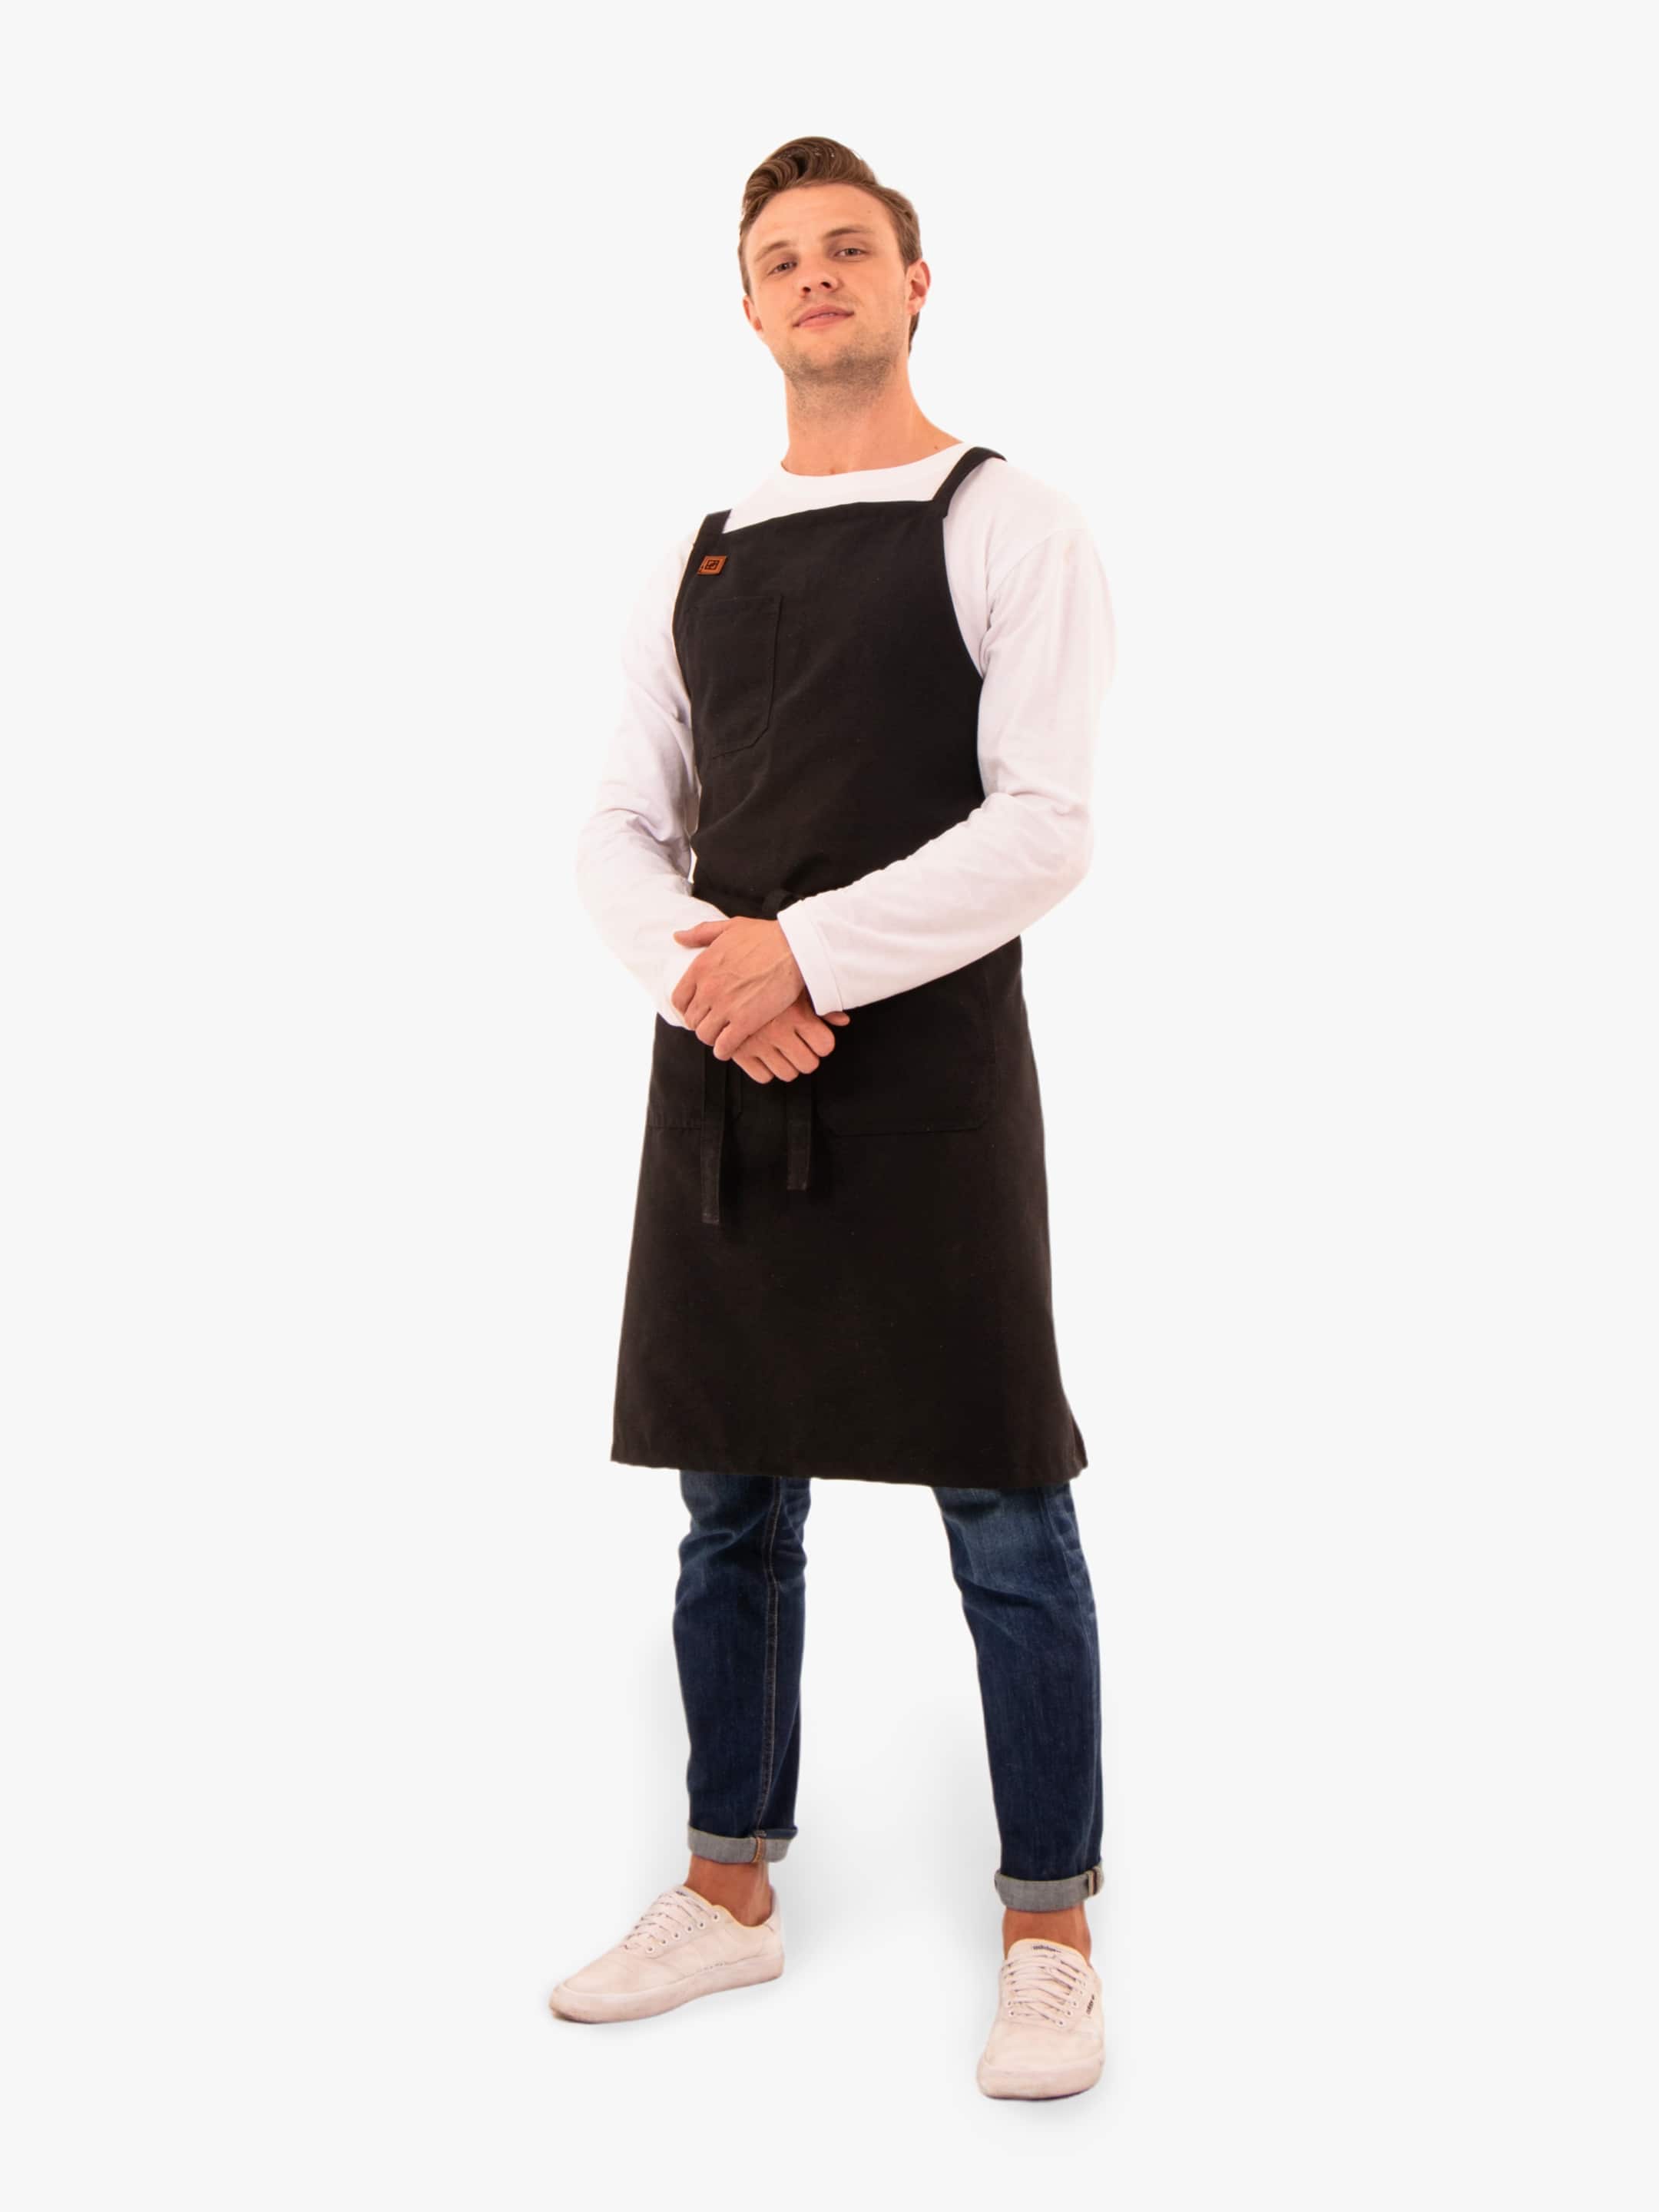 Blackcurrant Black -- Eco-friendly cooking apron